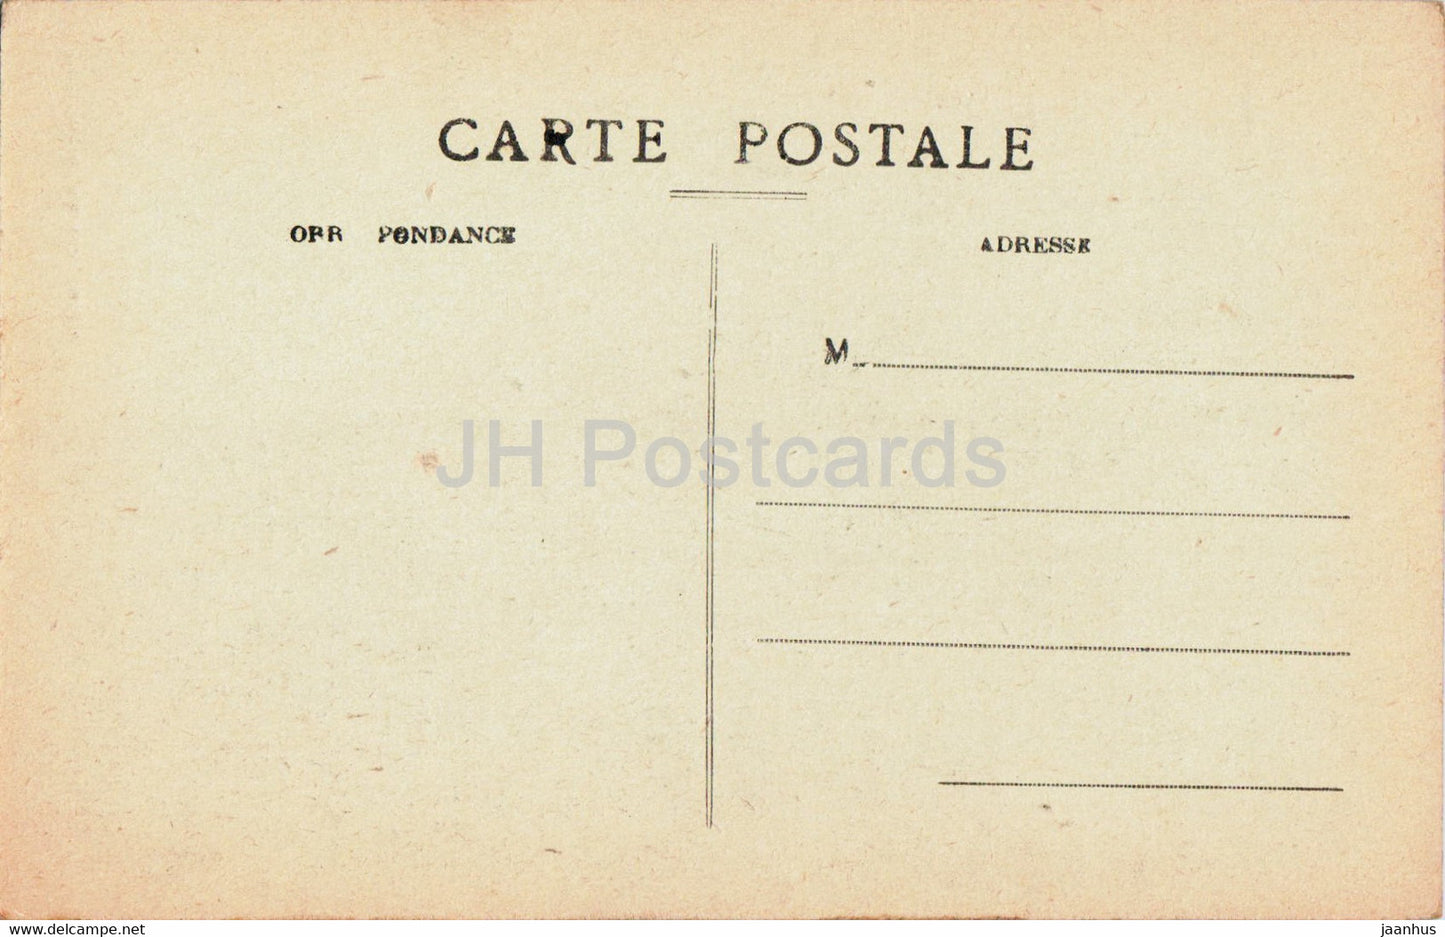 Le Puy Mary et l'Hotel Leoty – 1855 – alte Postkarte – Frankreich – unbenutzt